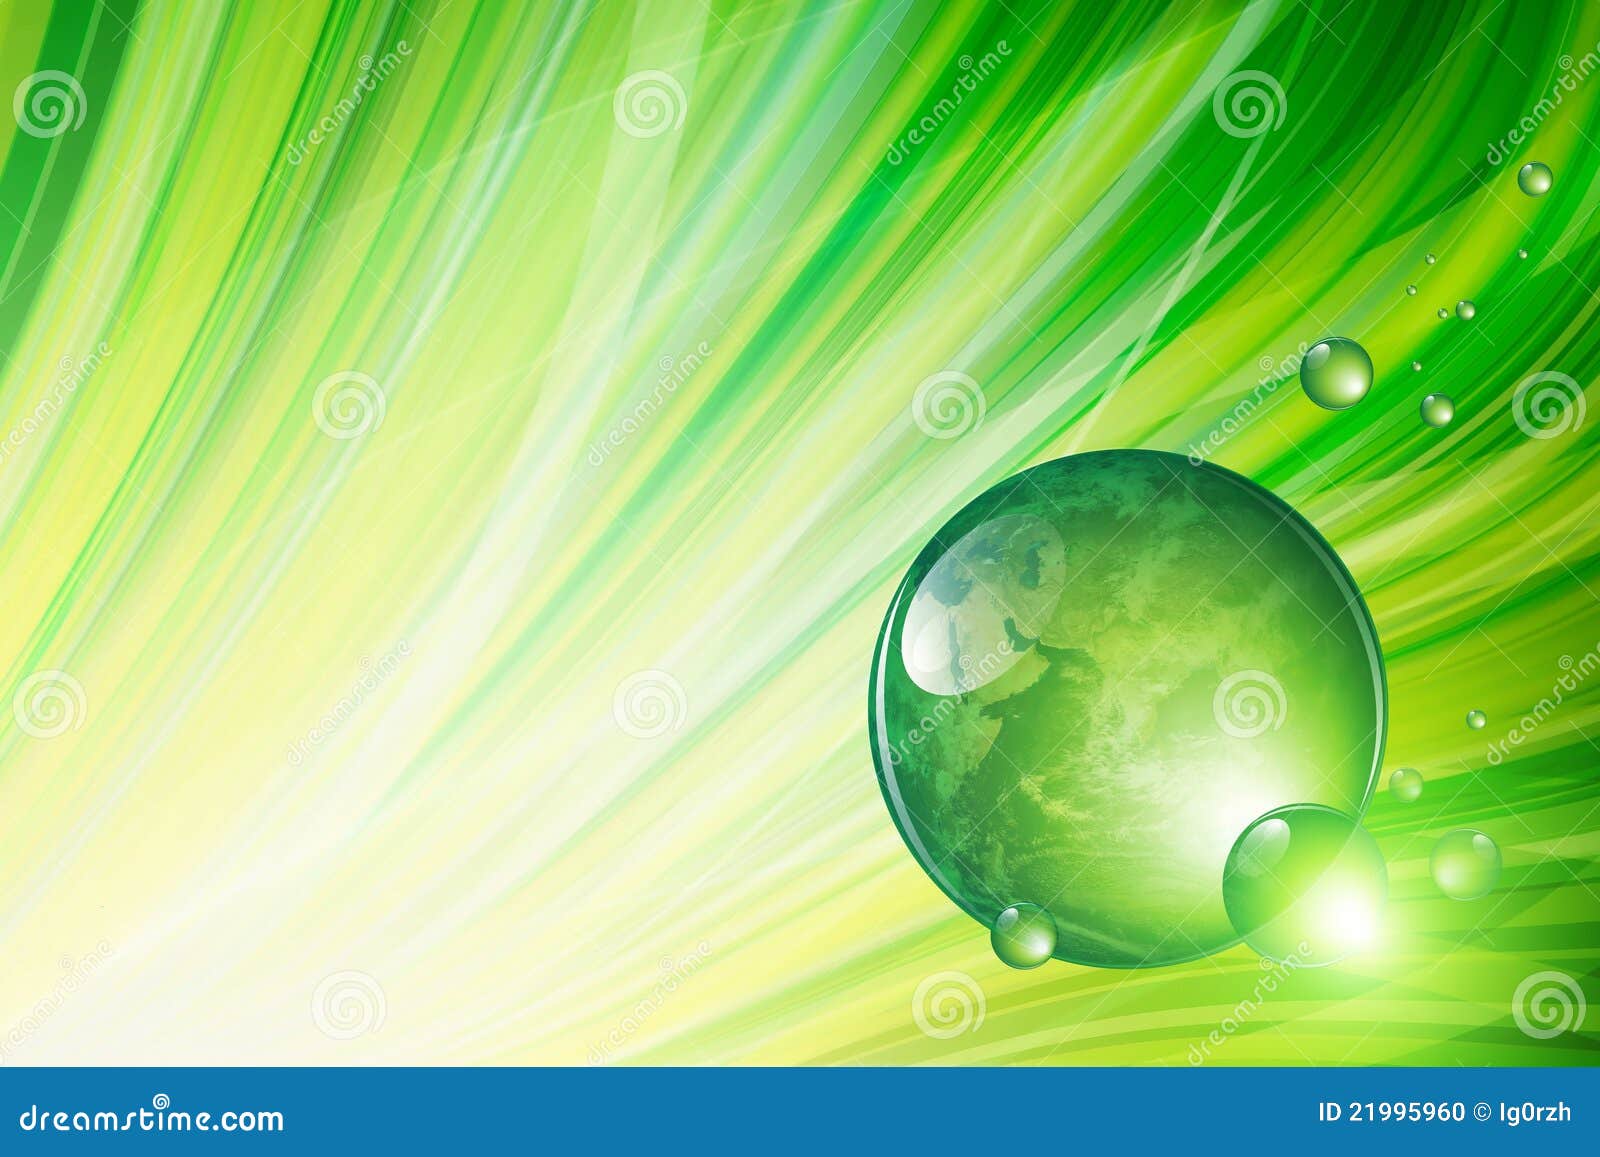 Green planet stock illustration. Illustration of perfect - 21995960